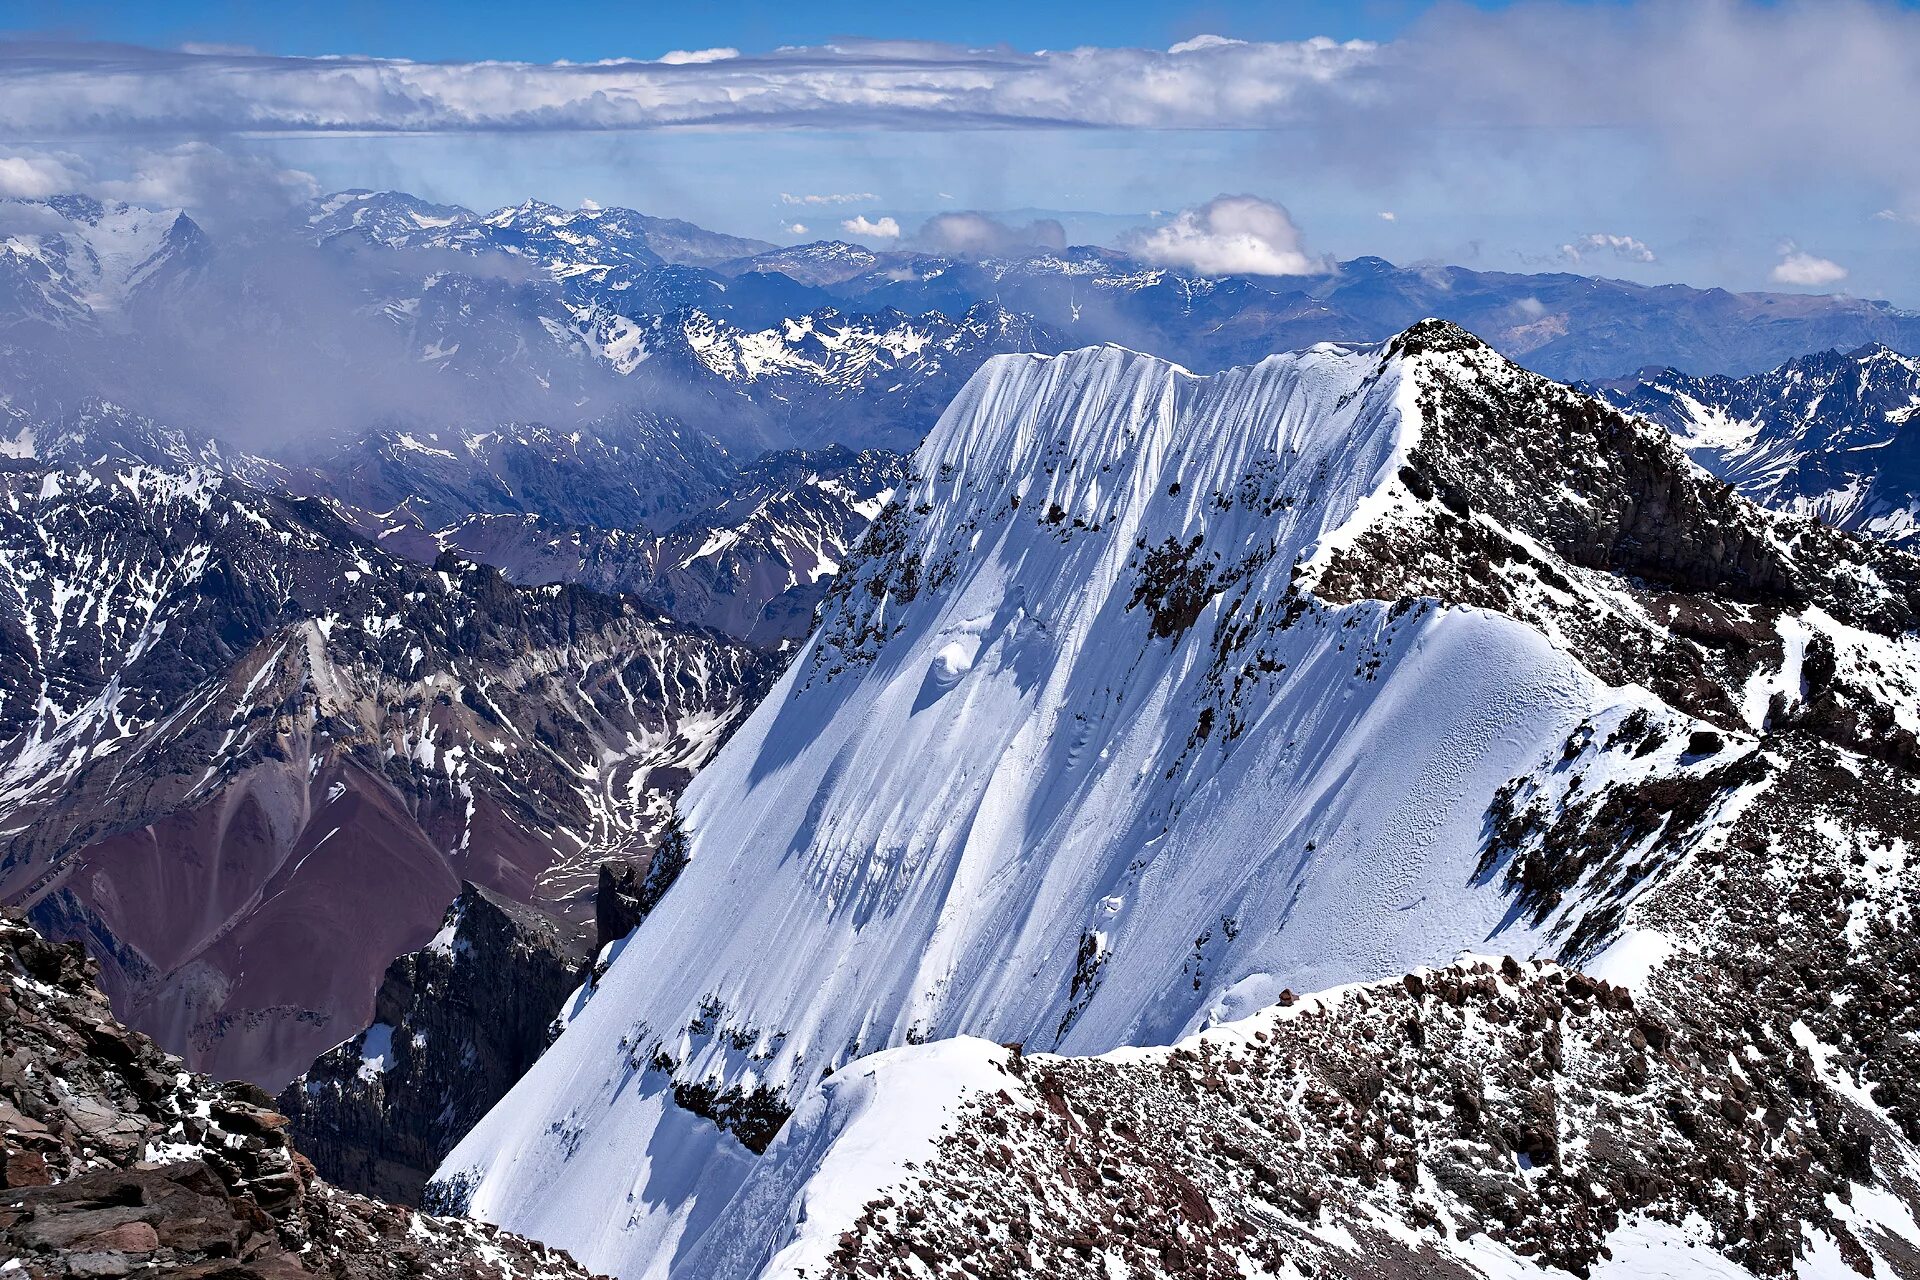 Самая большая горная система в мире. Andes Аконкагуа гора. Мендоса Аргентина Аконкагуа. Южная Америка горы Анды. Горная цепь Анды.